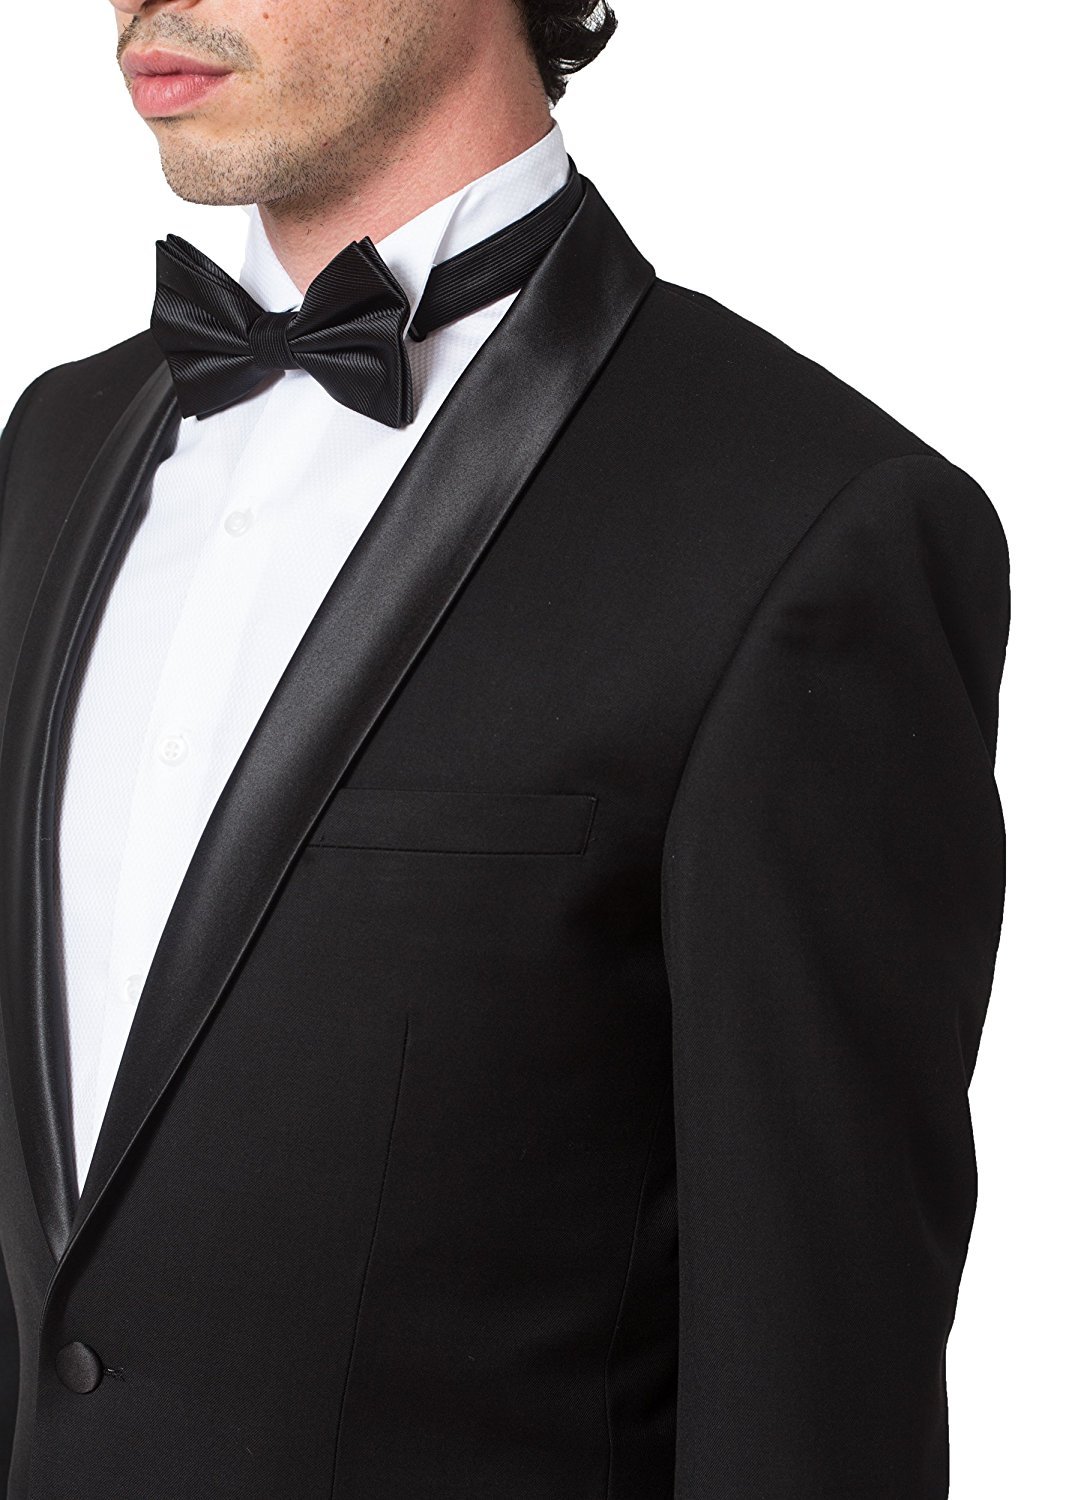 Giorgio Fiorelli Men’s G47815/1 One Button Modern Fit Two-Piece Shawl Collar Tuxedo Suit Set - Black - 44R - image 4 of 5